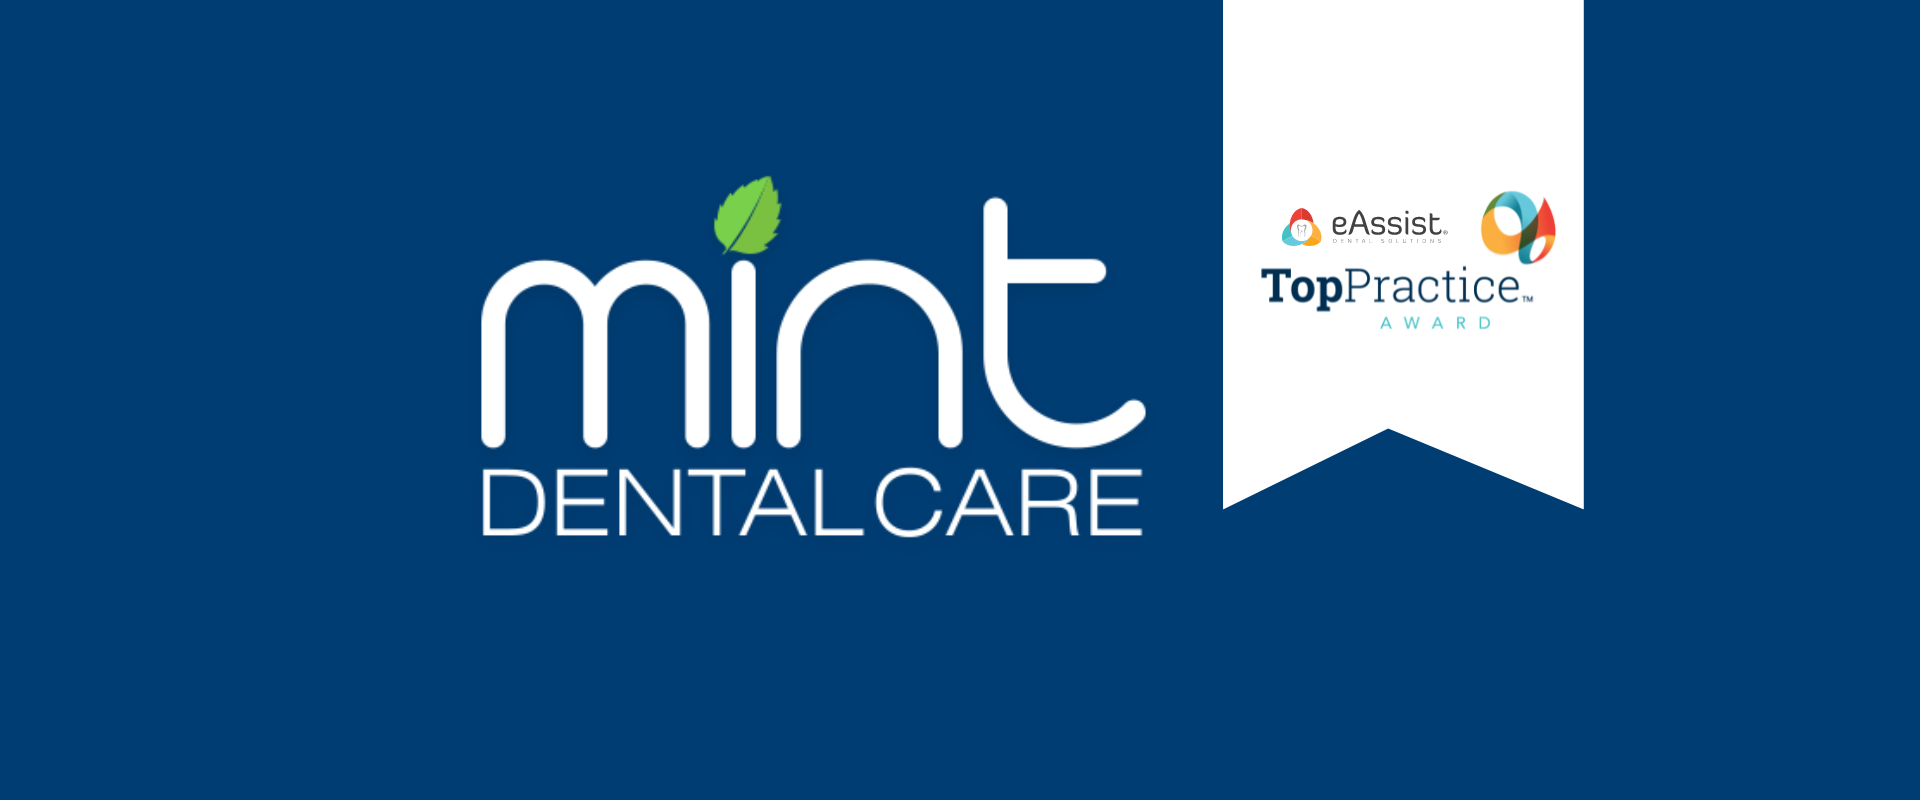 Mint Dental Care Wins eAssist's Top Practice Award